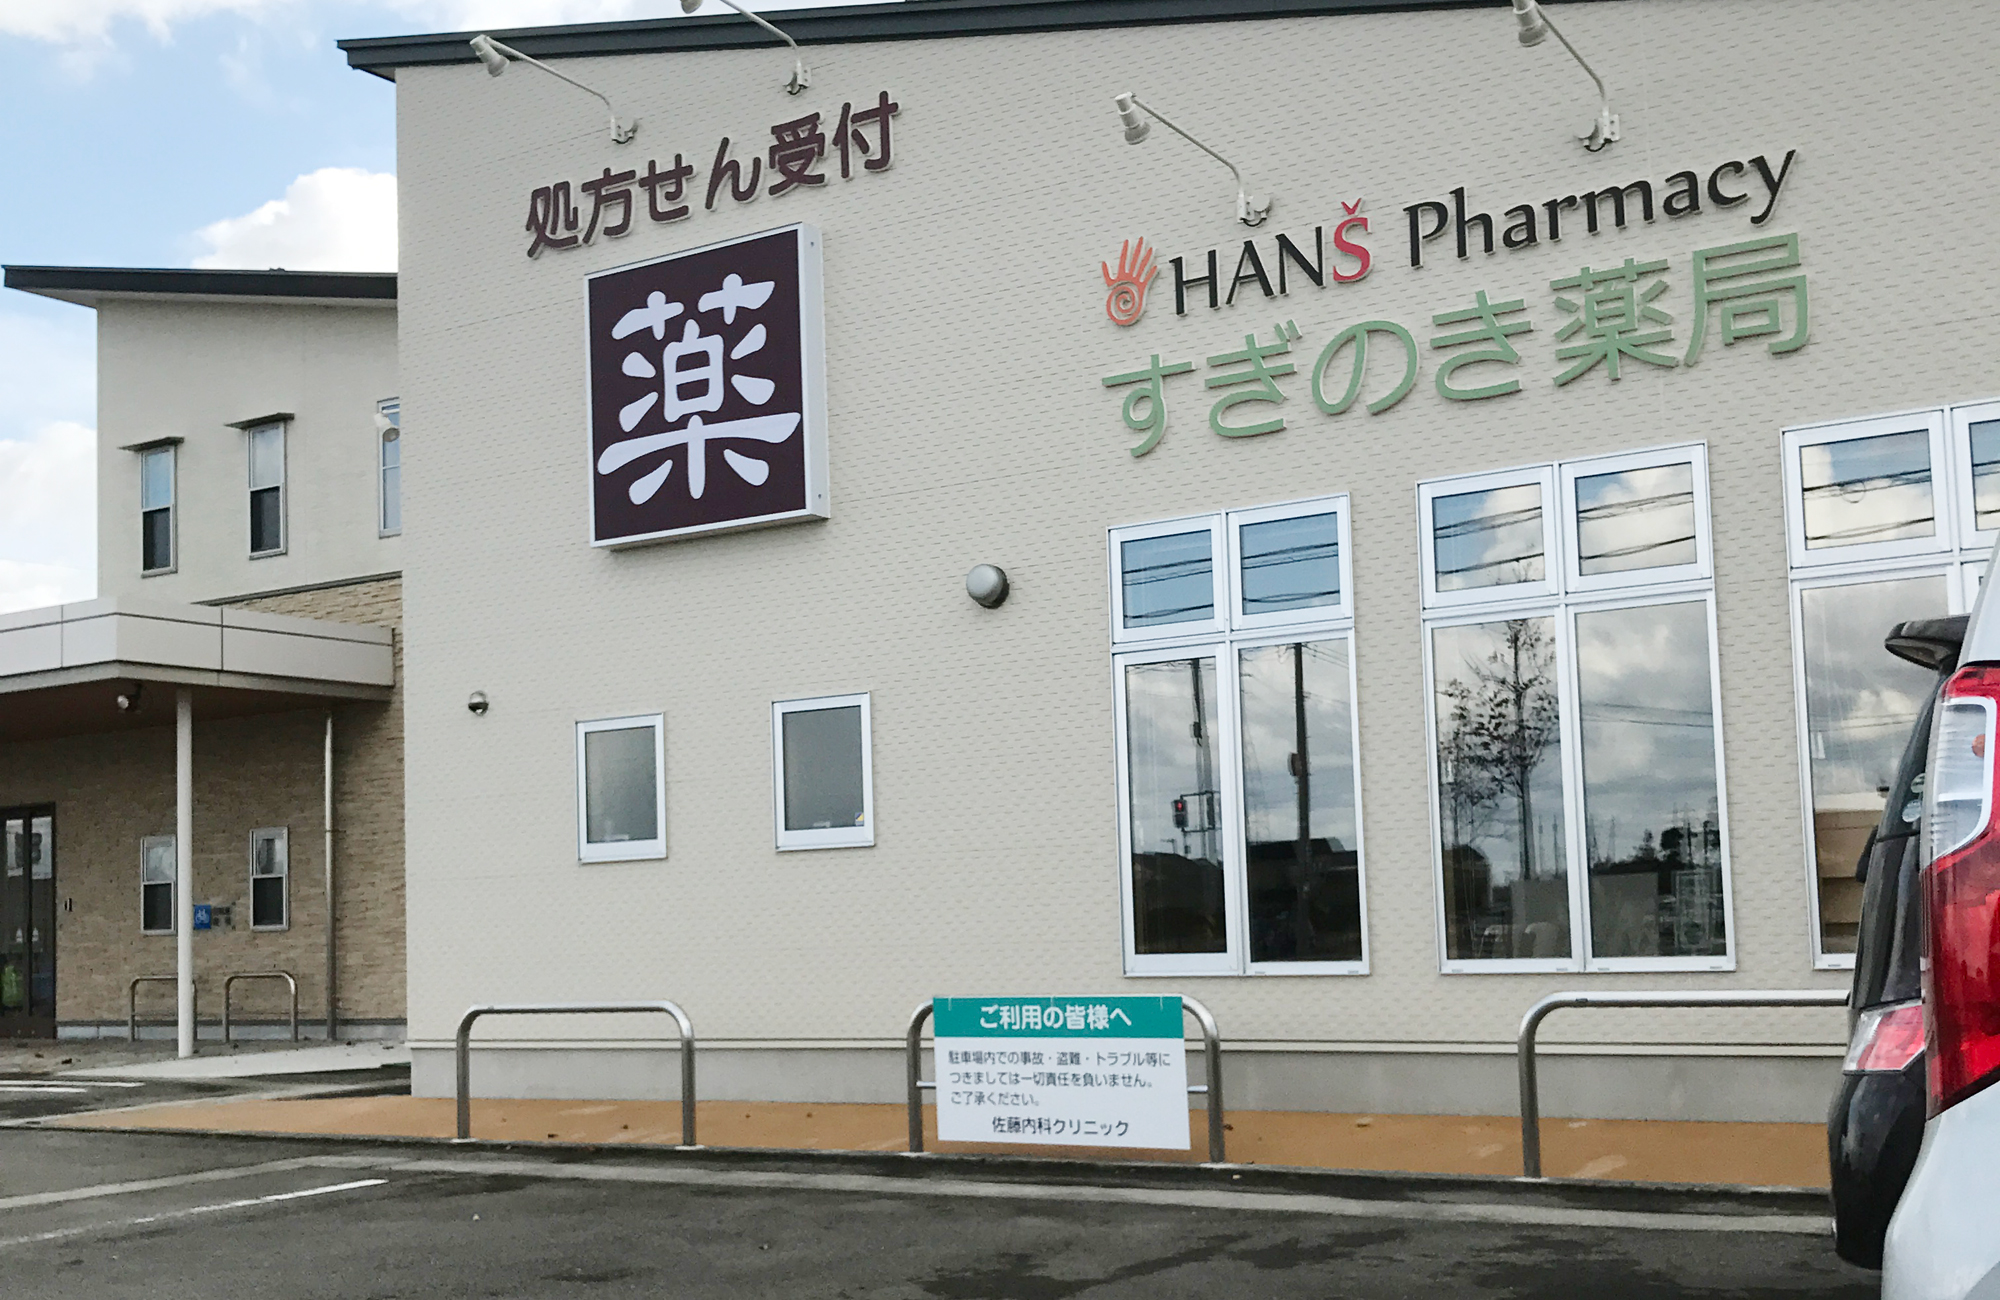 HANS Pharmacy